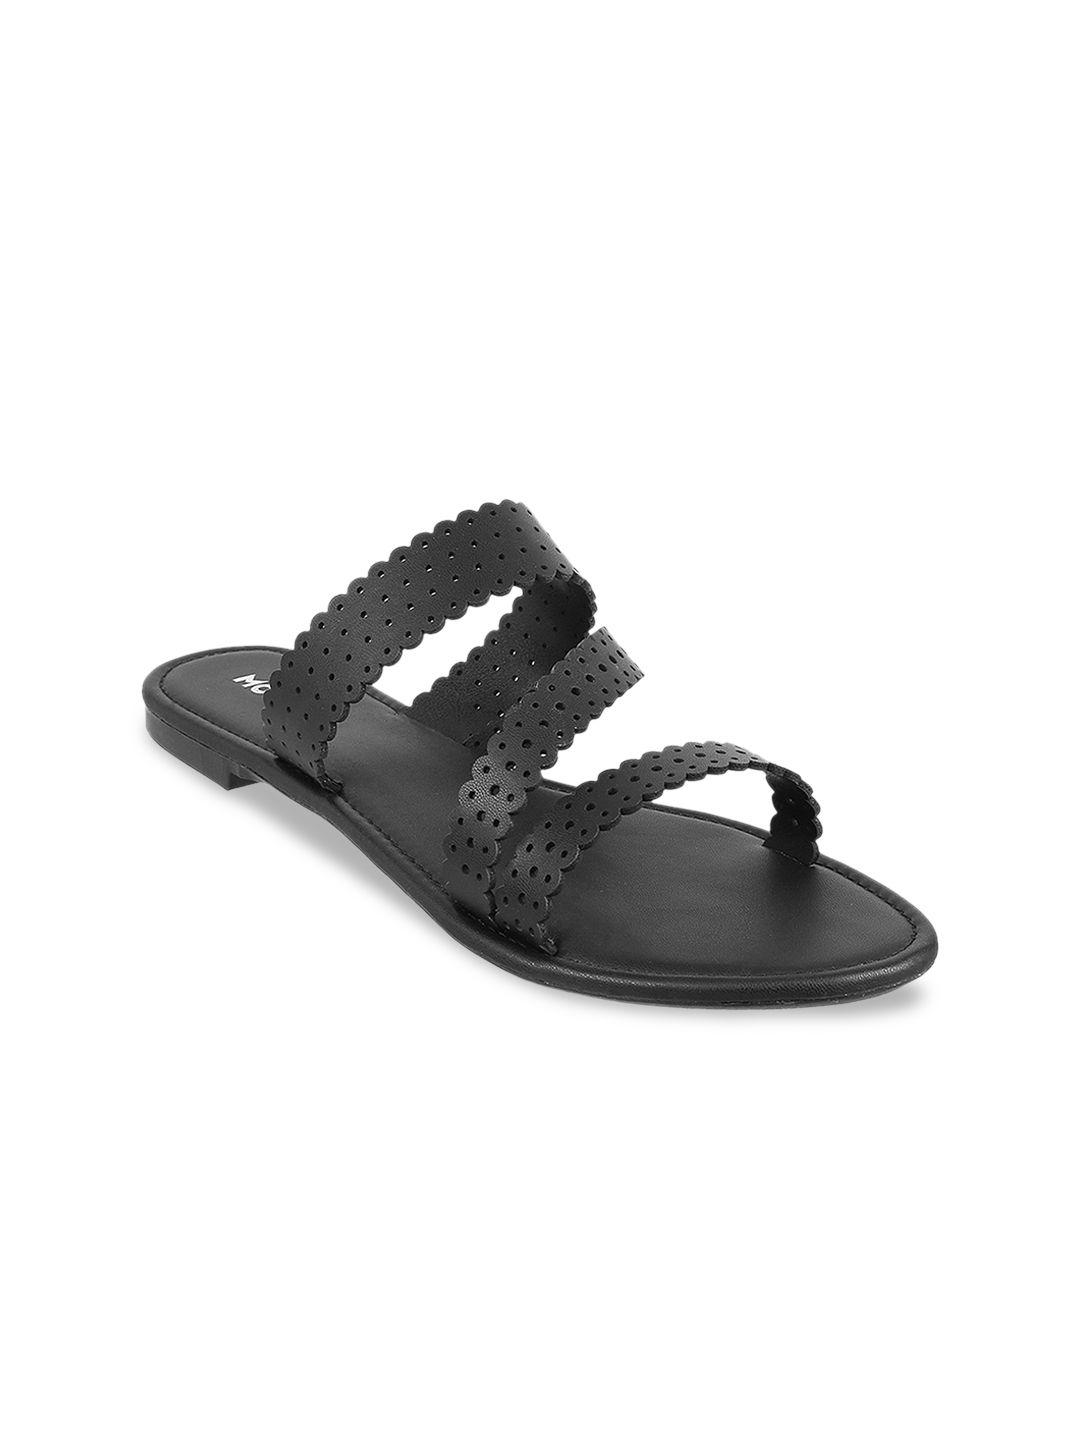 mochi-women-black-textured-open-toe-flats